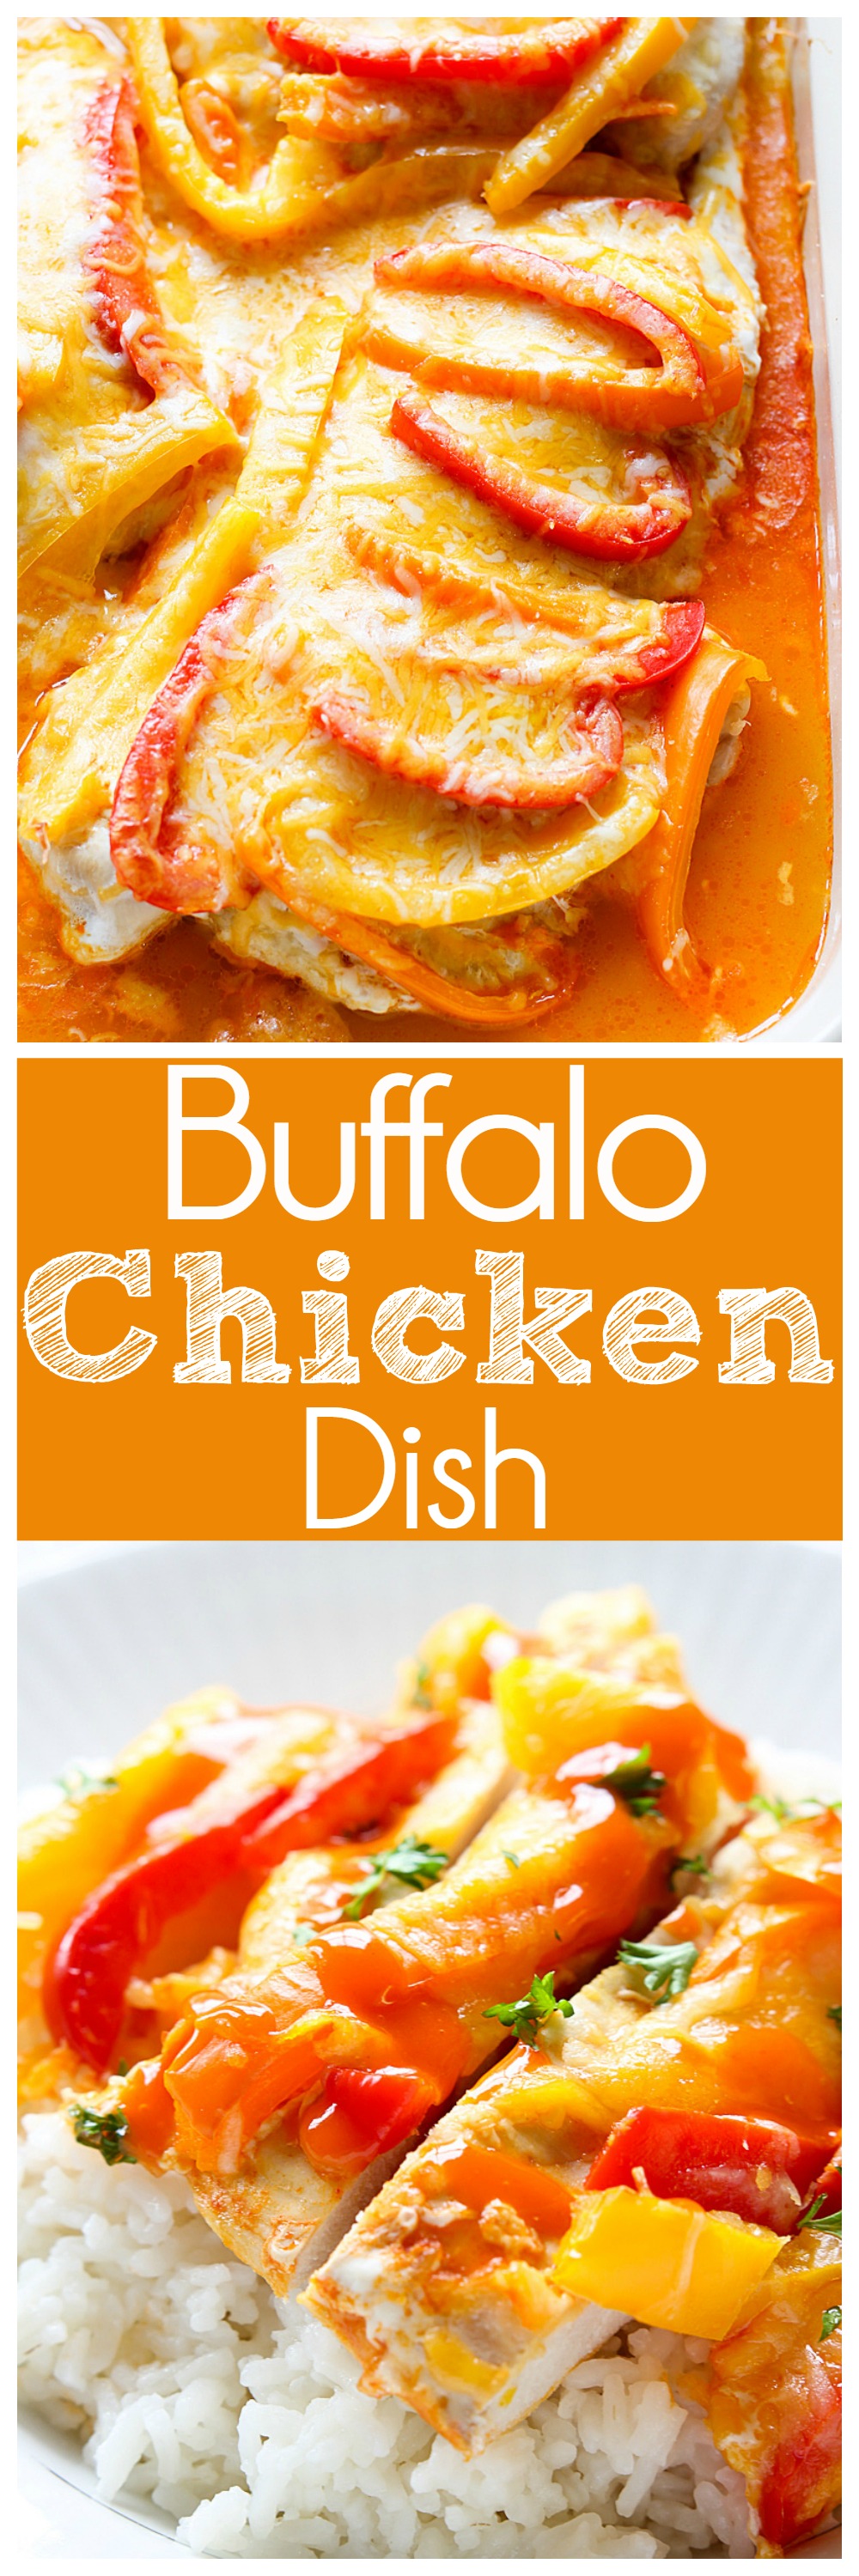 Buffalo Chicken Dish